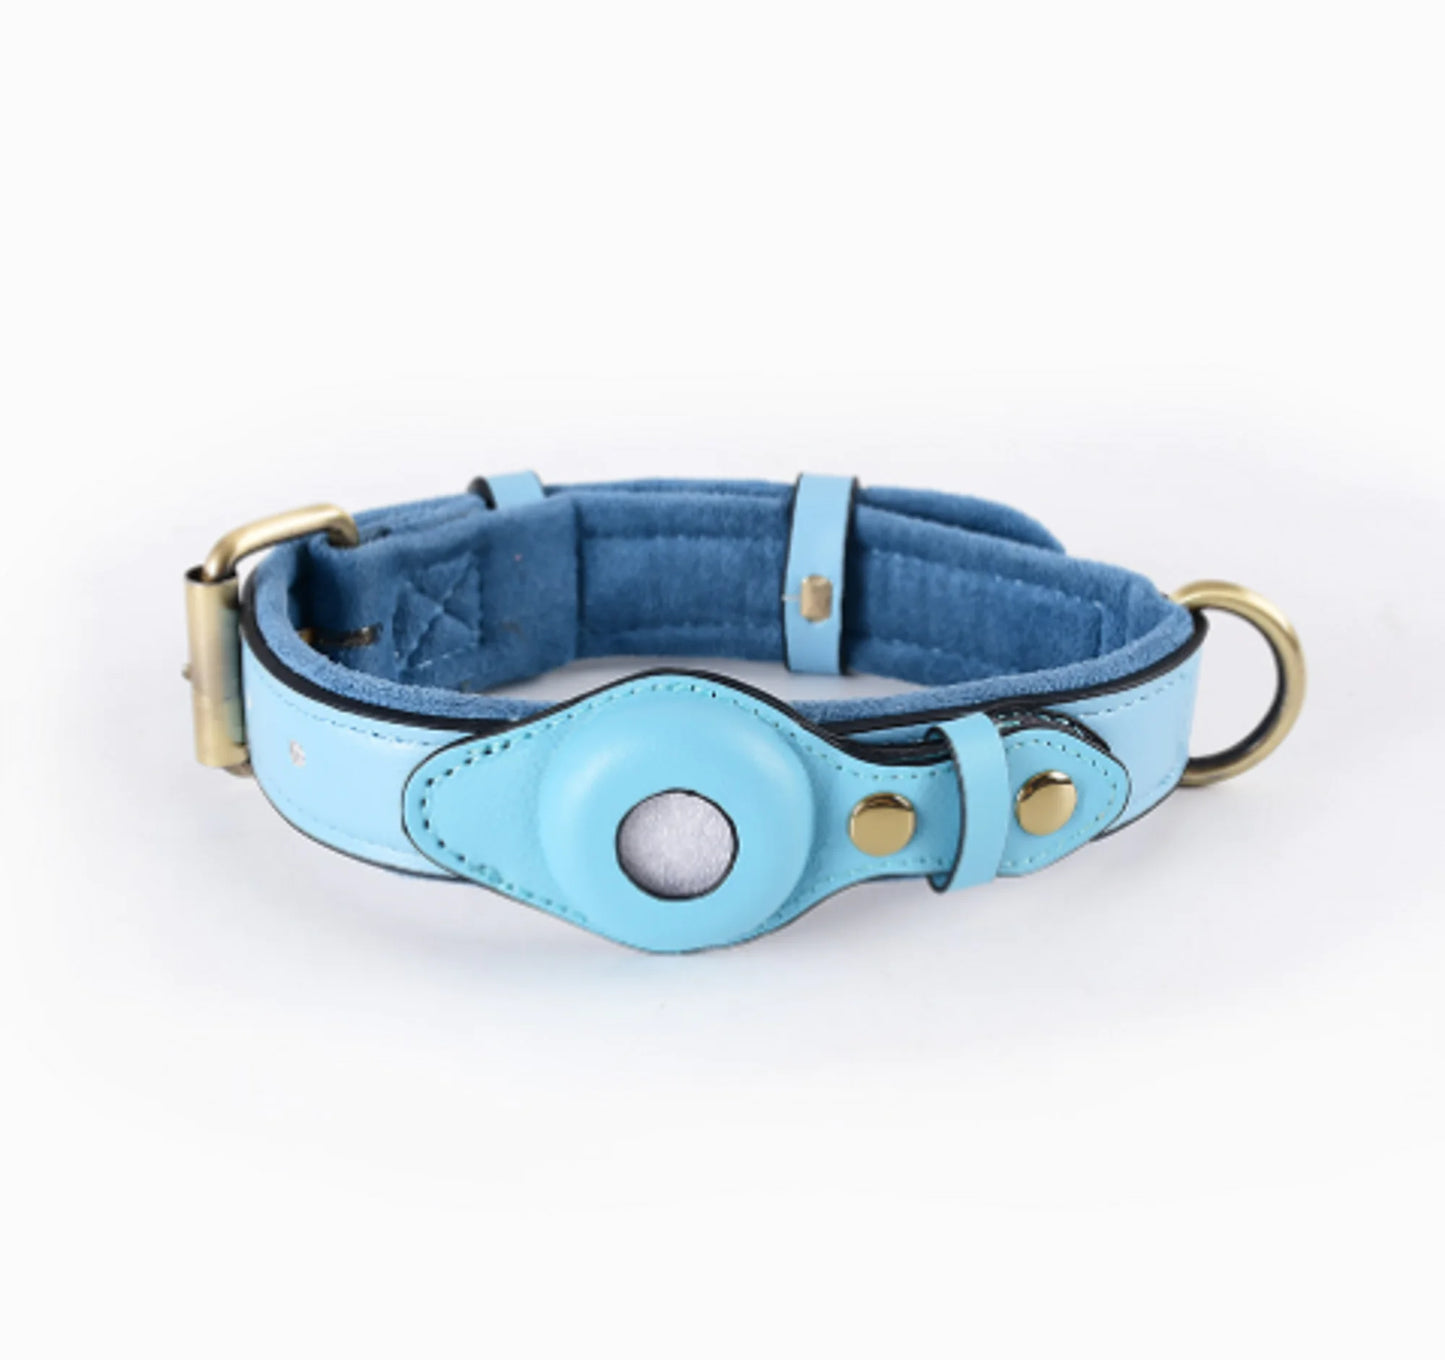 New Leather Airtag Dog Collar Pet Adjustable Collar